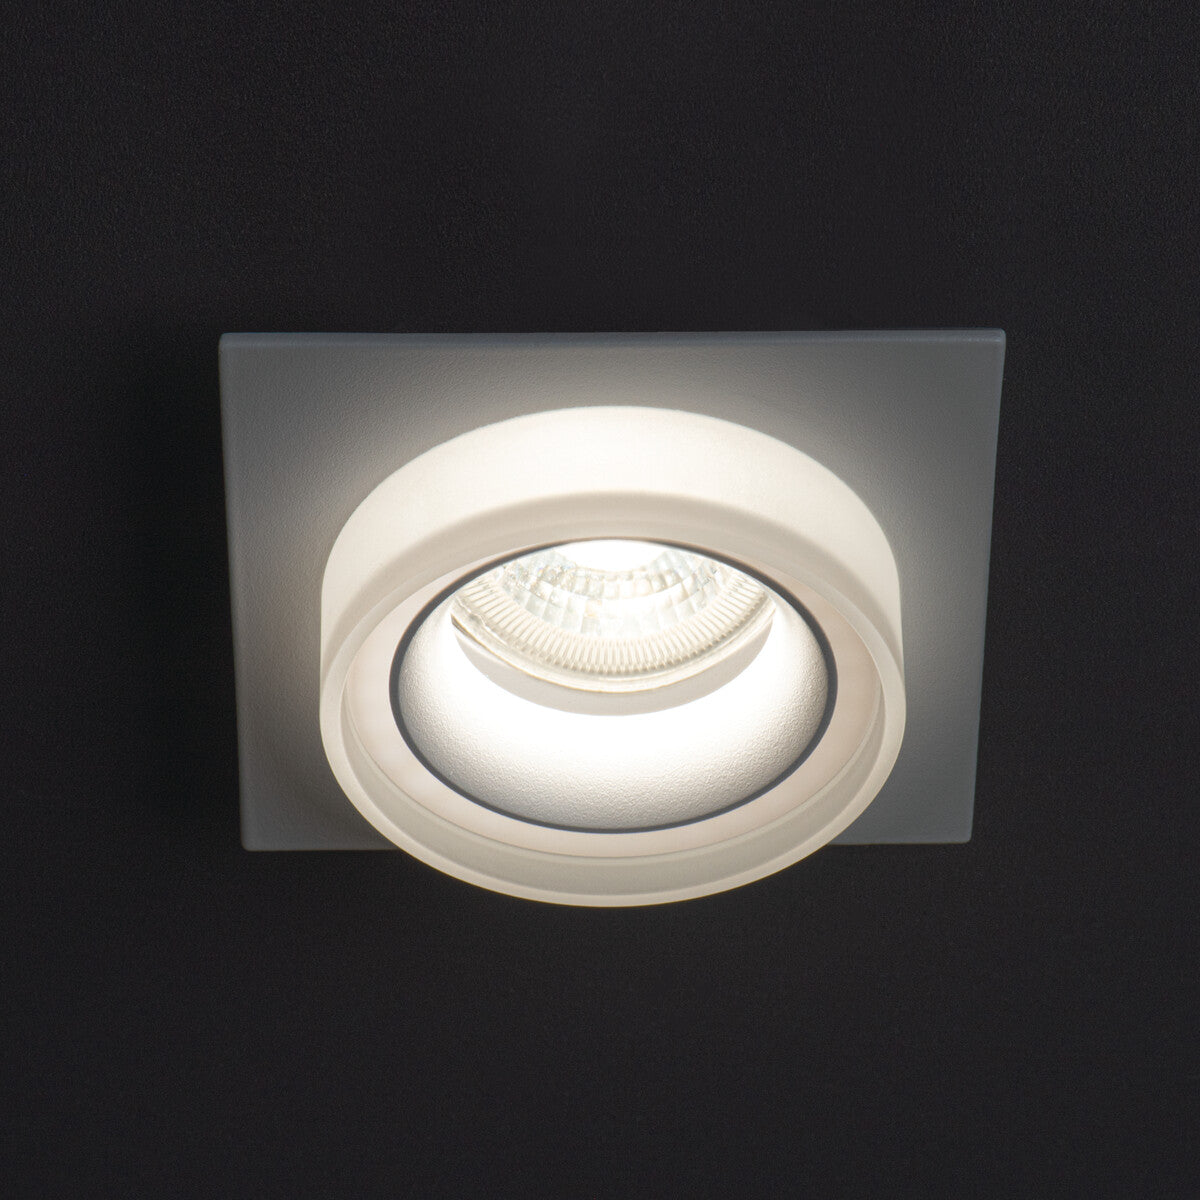 Kanlux LONVI Ceiling Mounted Square GU10 Decorative Spot Light FItting